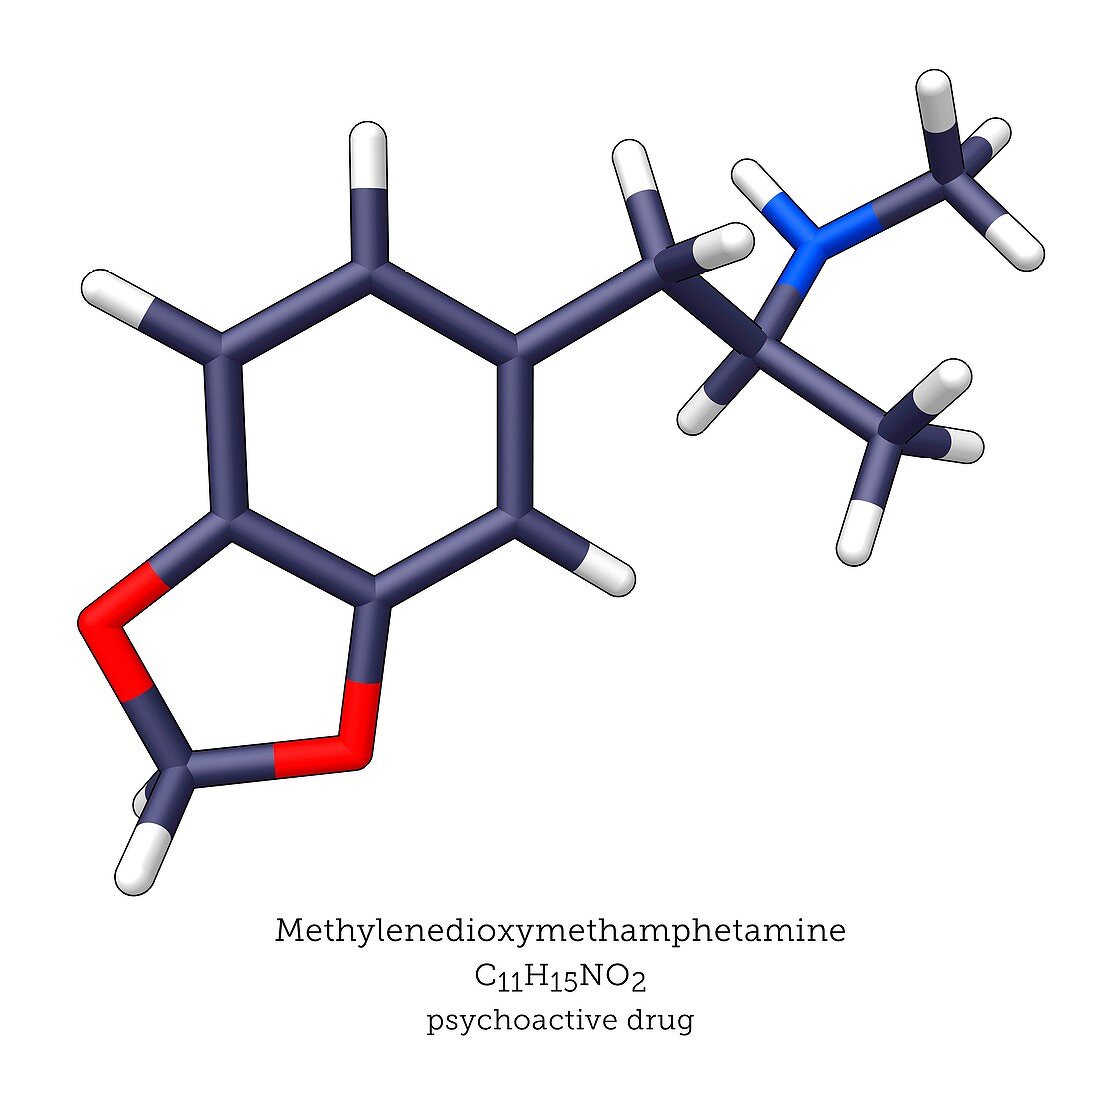 MDMA psychoactive drug, molecular model